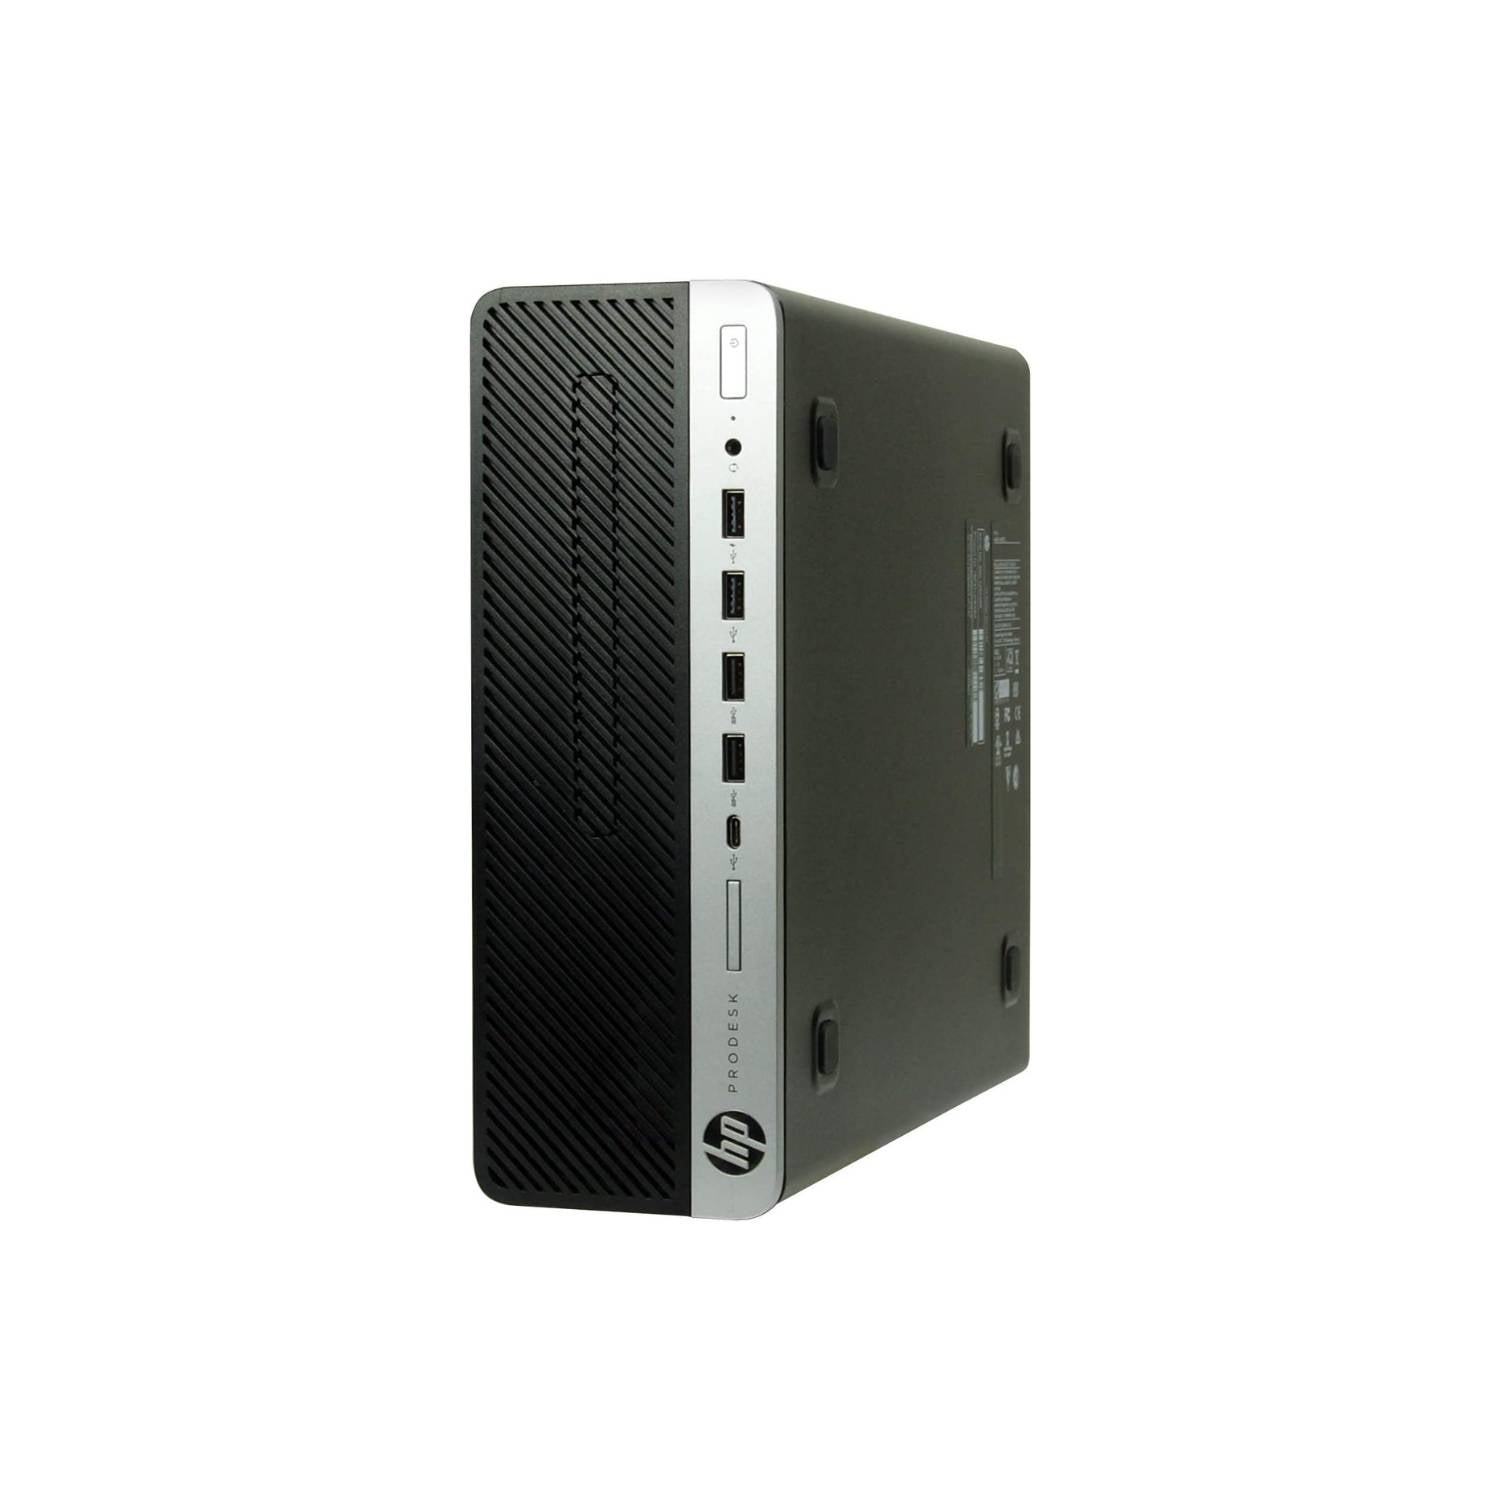 PC Desktop Hp Prodesk 600 G3 SFF (i5 8GB 256GB SSD) + Teclado & Mouse Reacondicionado Grado A